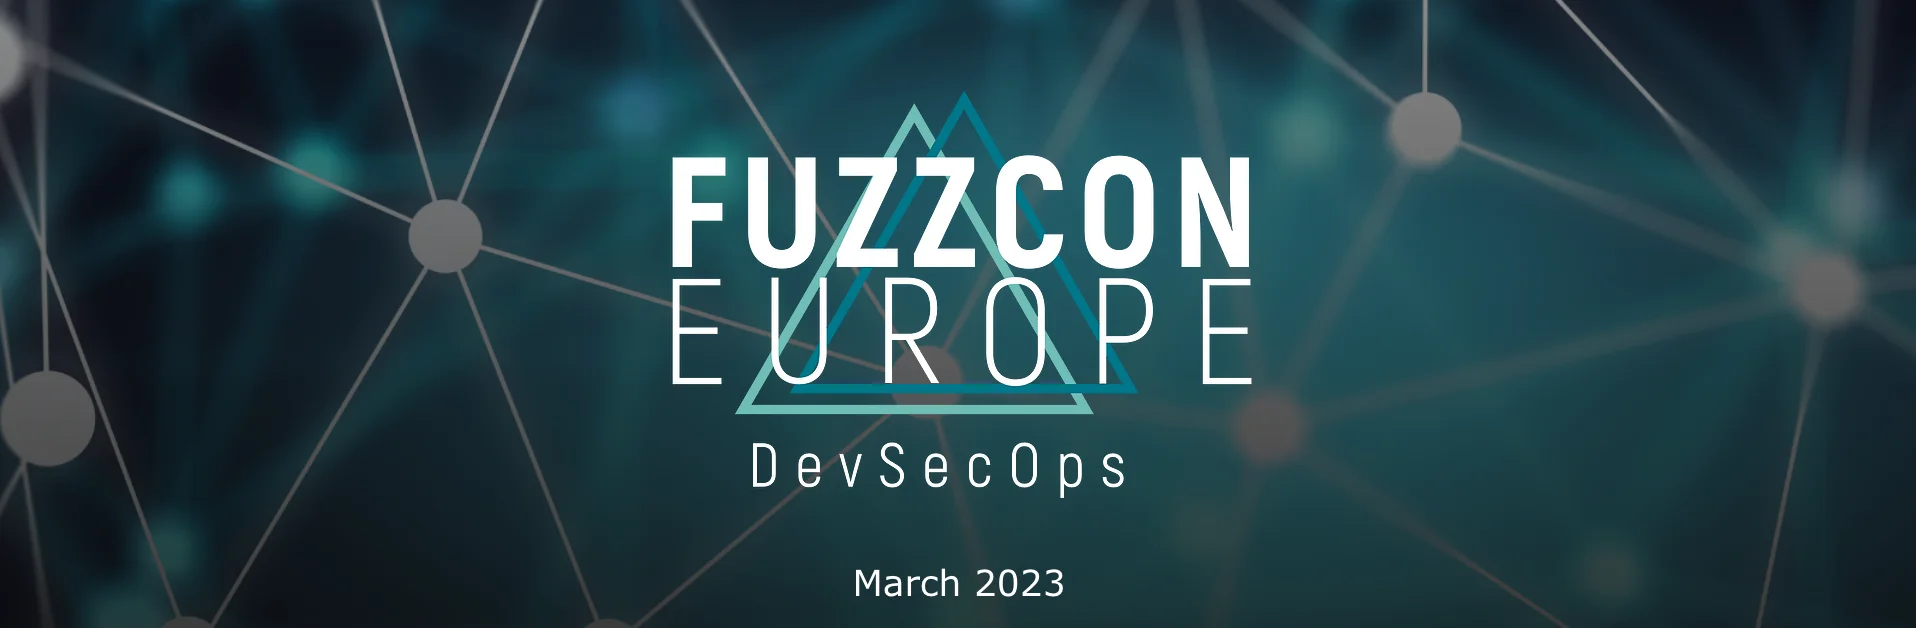 FuzzCon-Europe-DevSecOps-2023